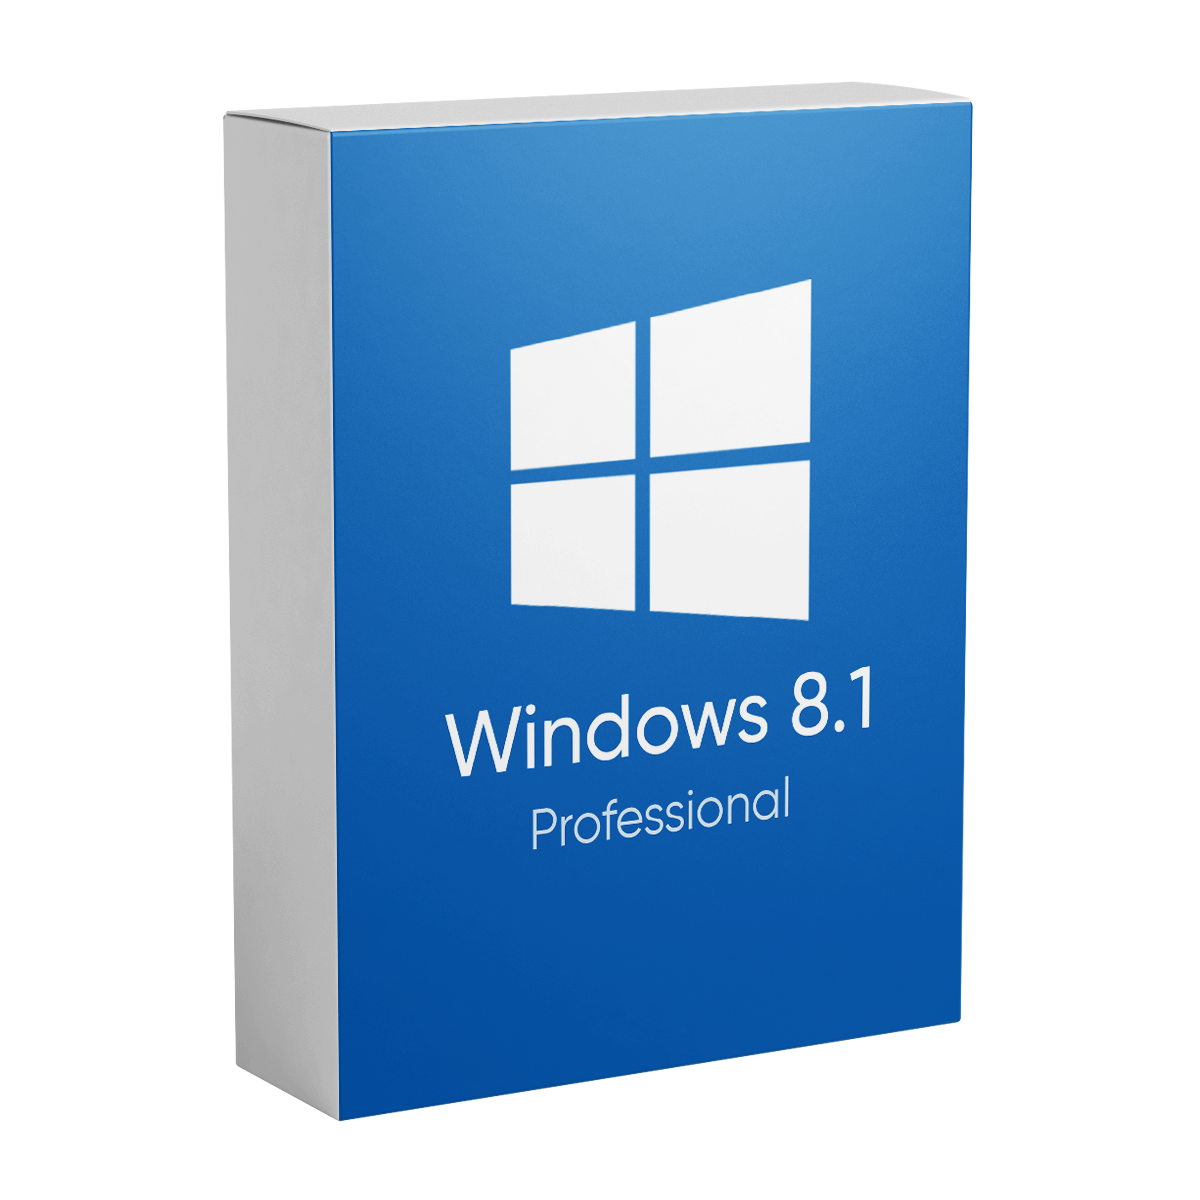 Windows 8.1 Professional - Lifetime License for 1 PC